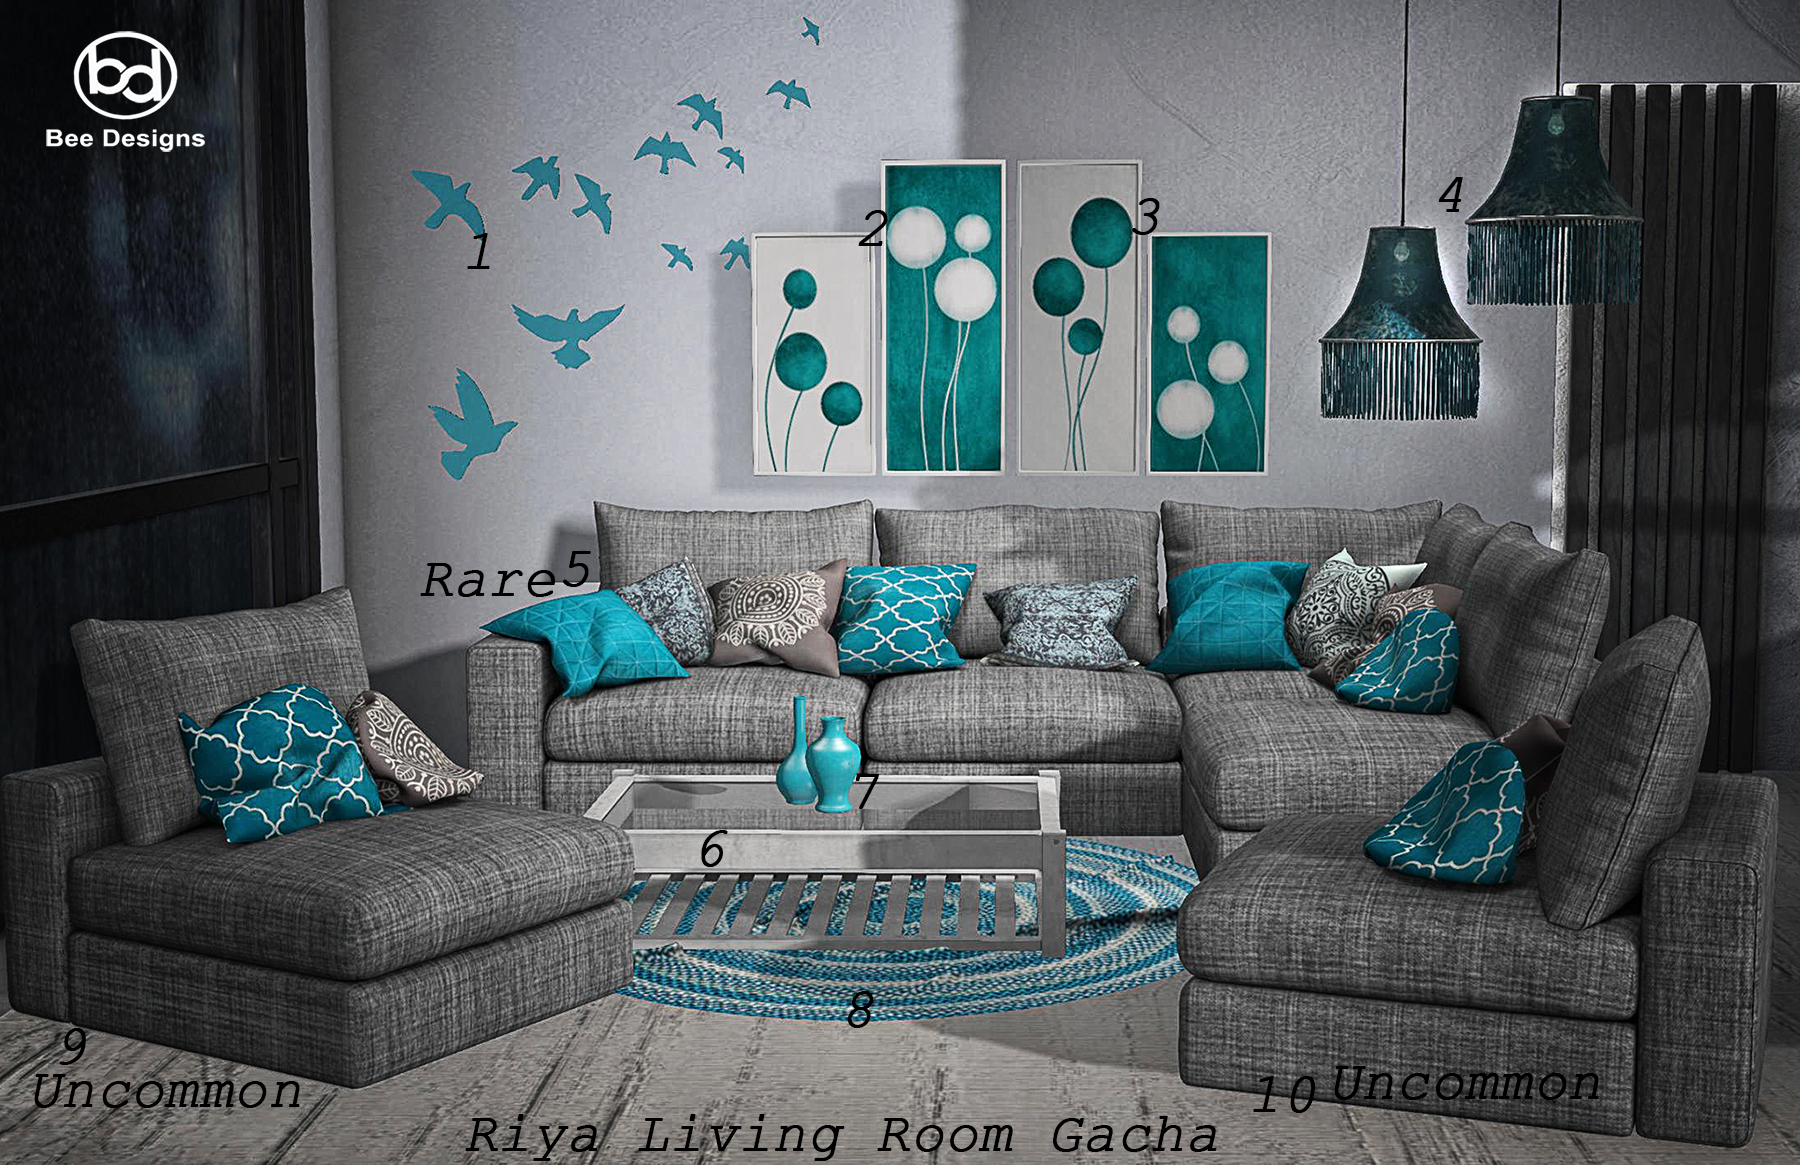 Bee Designs – Riya Living Room Gacha